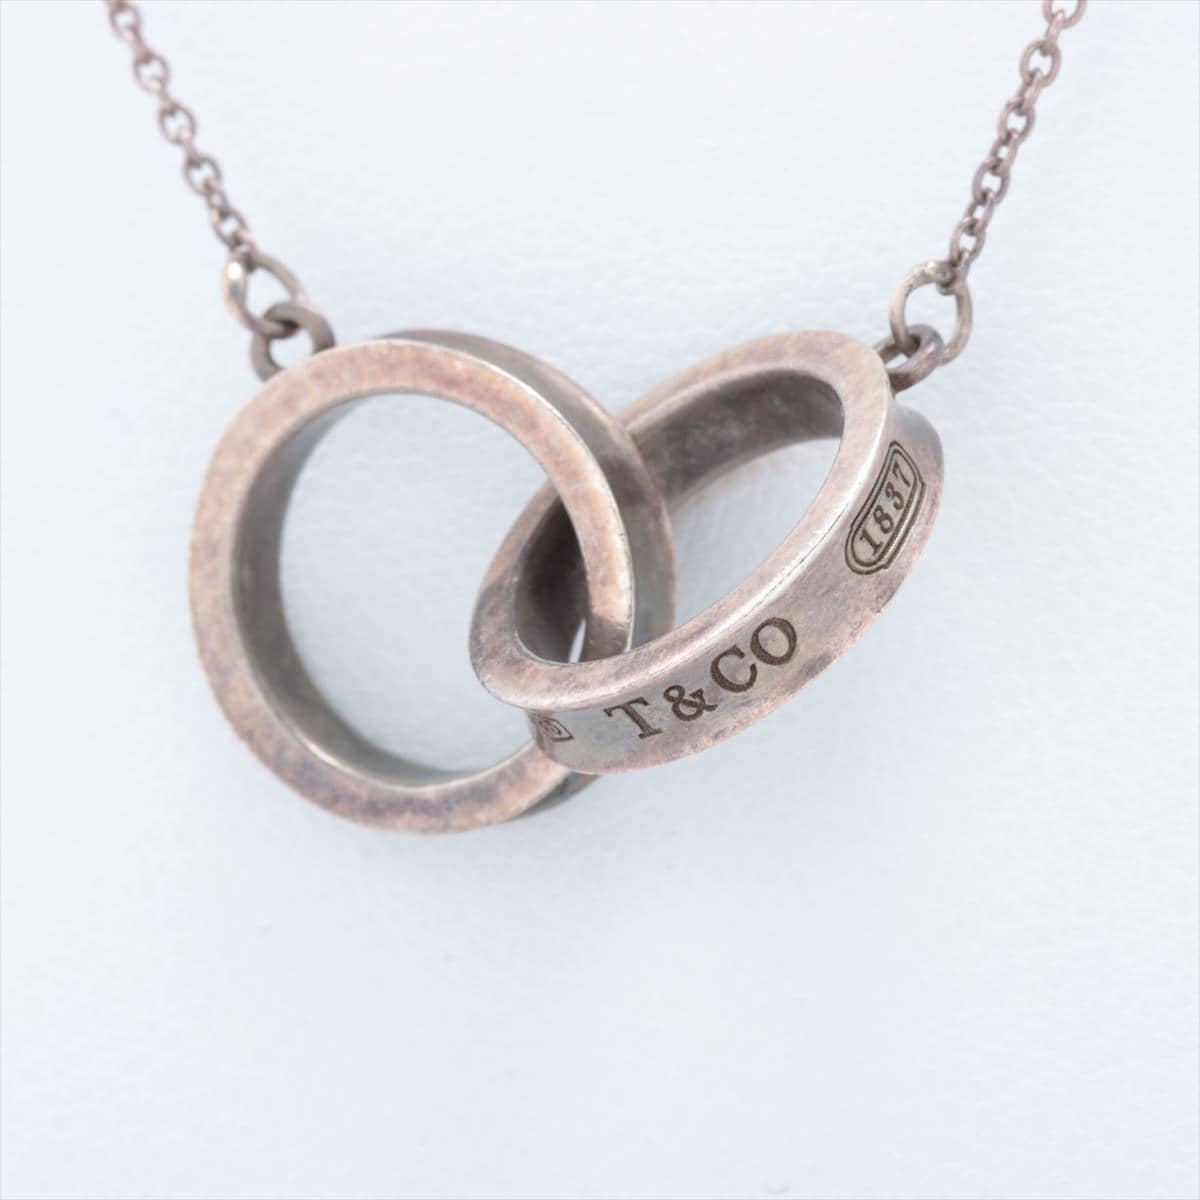 Tiffany 1837 Interlocking Circle Necklace 925 4.2g Silver